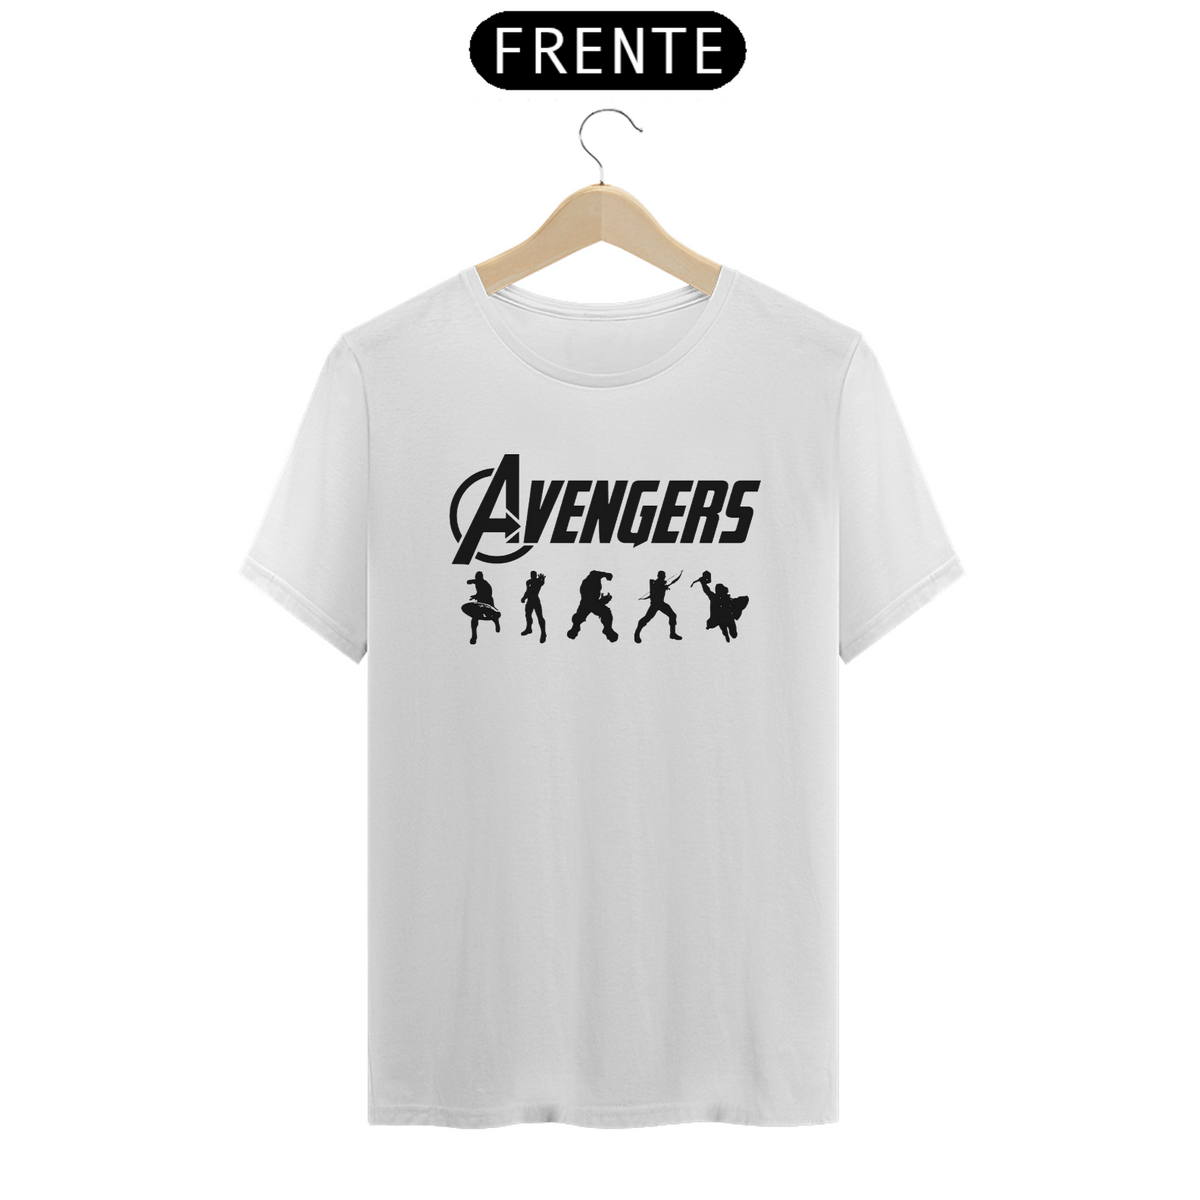 Nome do produto: Avengers A001